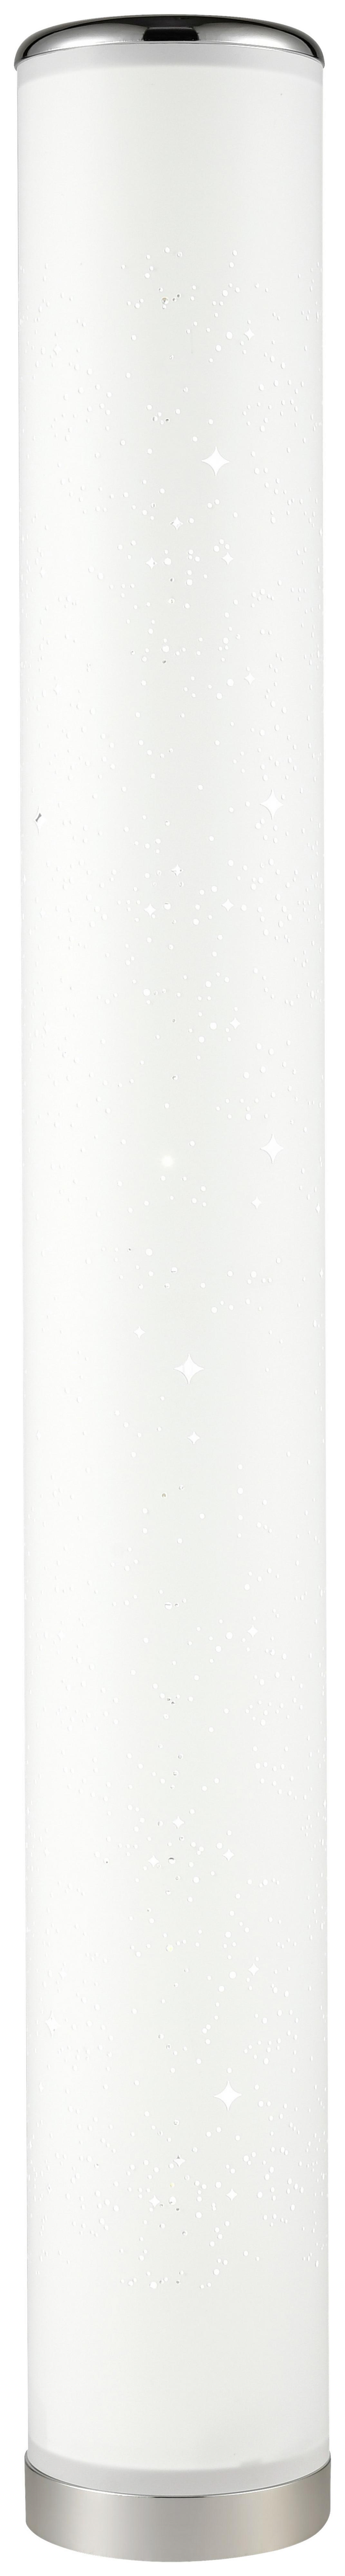 LED-Stehlampe Laura dimmbar Weiß mit Sternenhimmel - Weiß, MODERN, Kunststoff/Metall (13/104cm) - Luca Bessoni